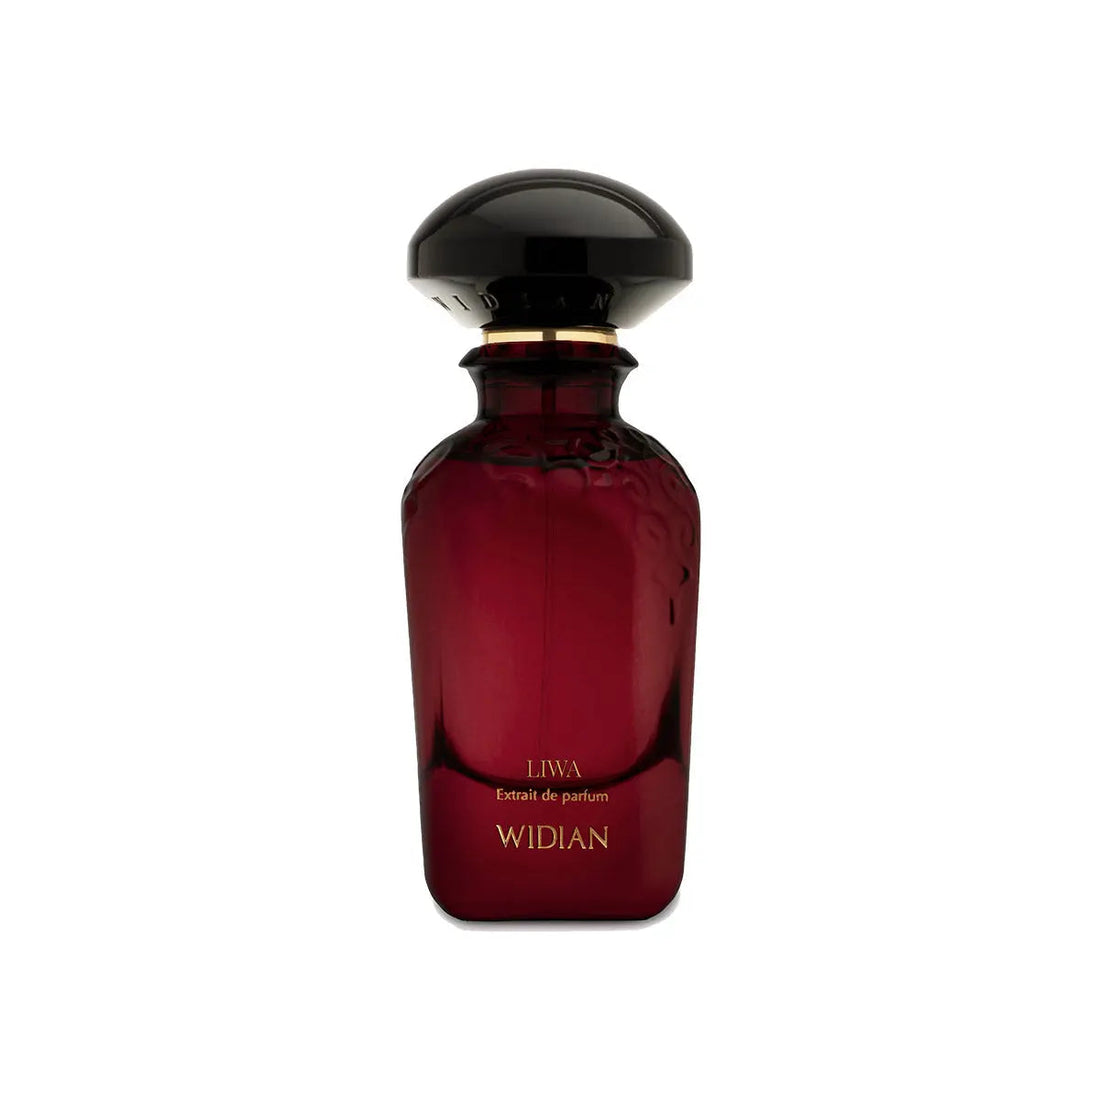 Liwa Widian perfume extract - 50 ml